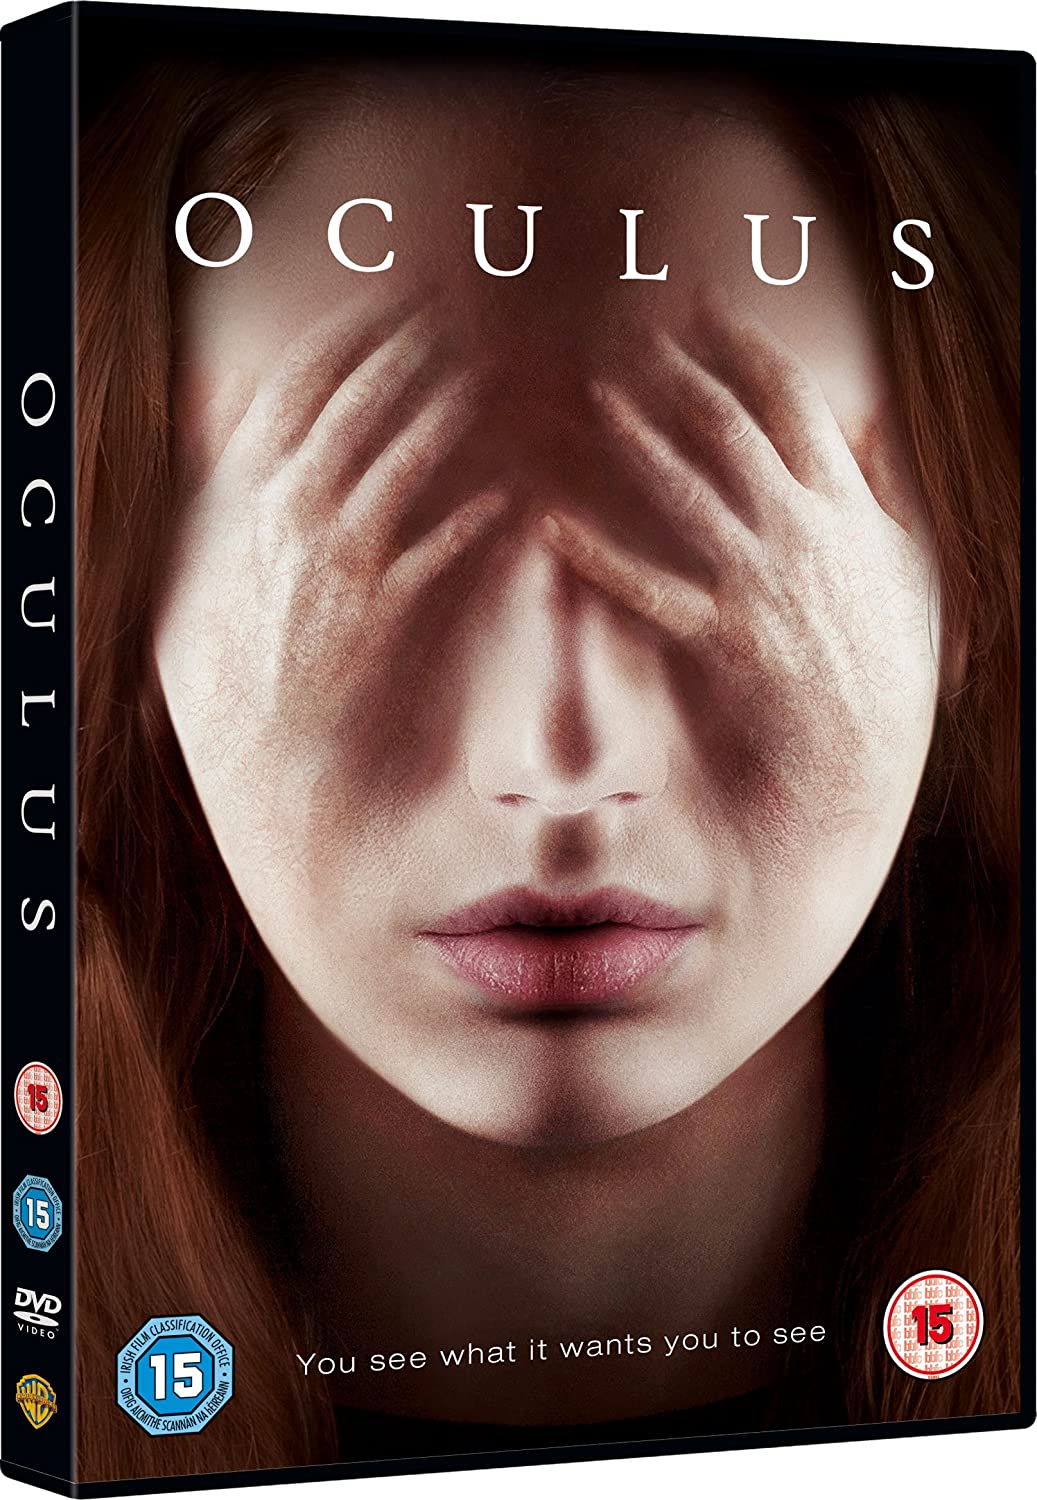 Oculus - Horror [2013] [2014] [DVD]